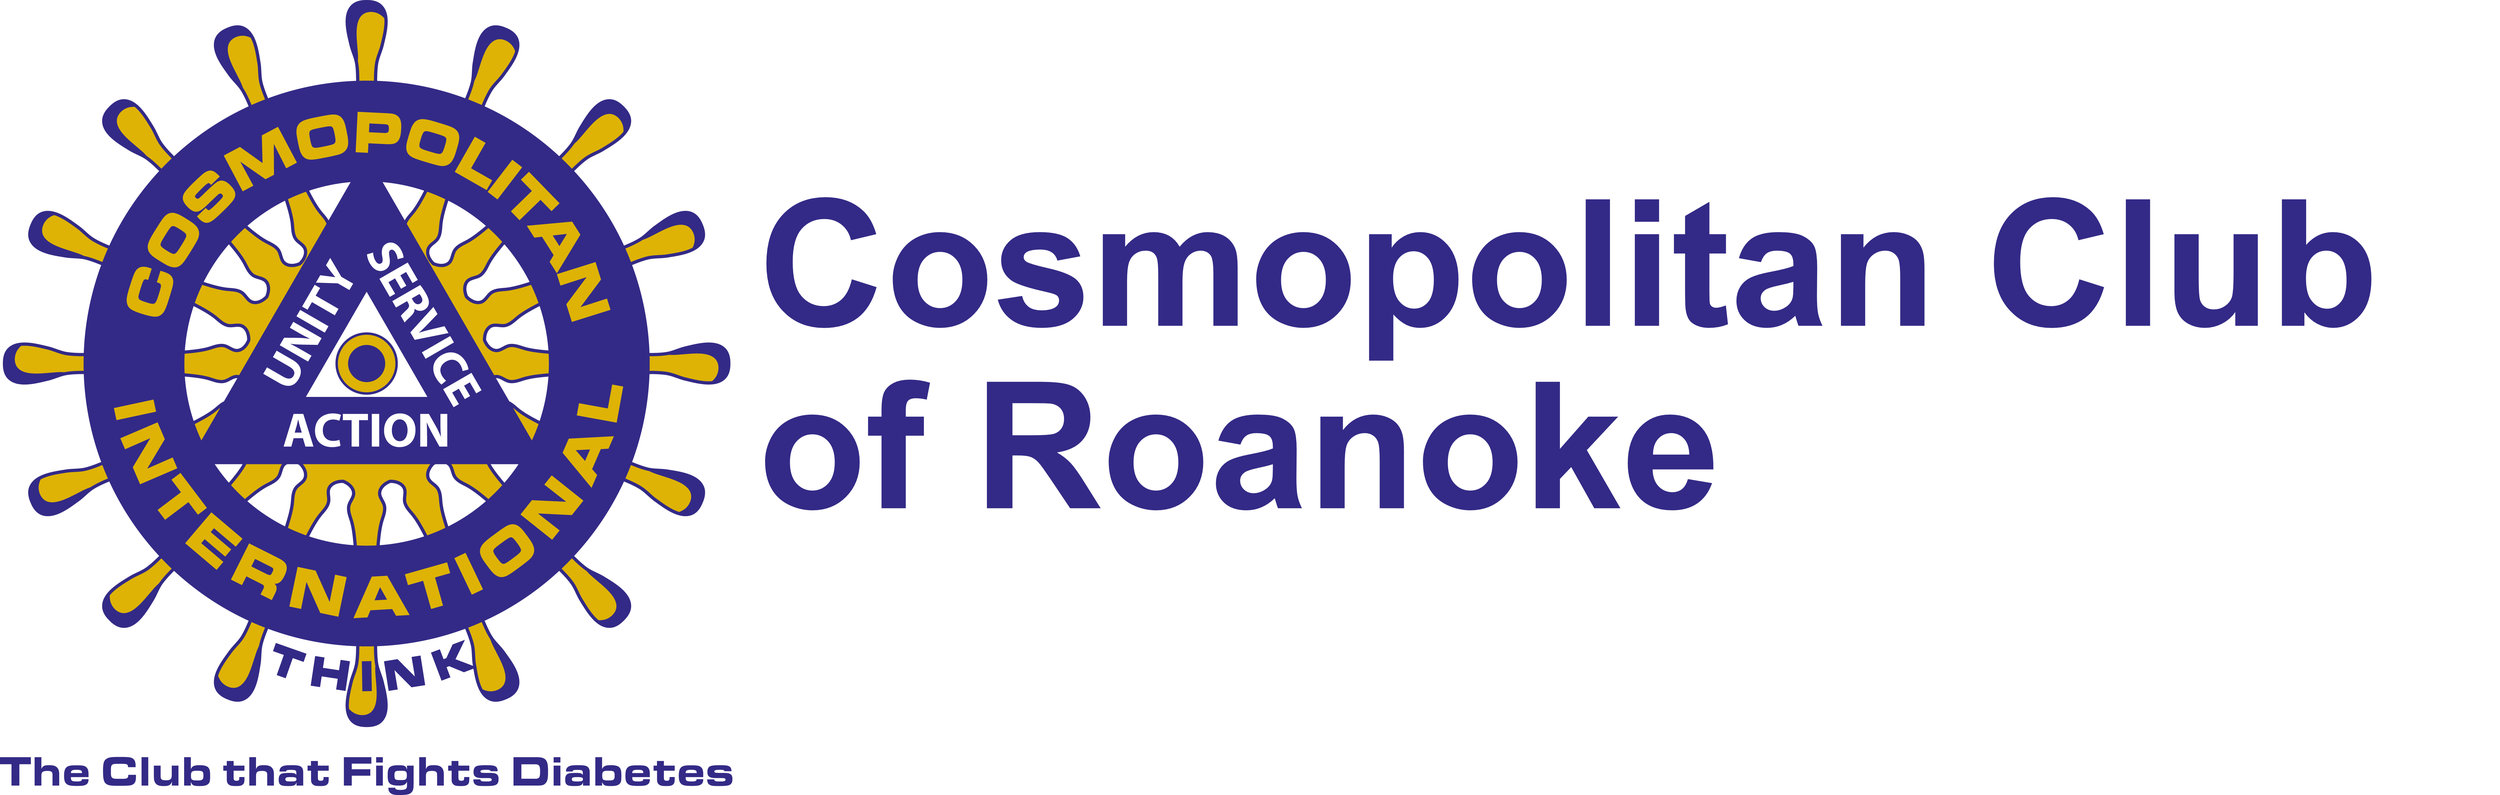 Cosmopolitan Club of Roanoke